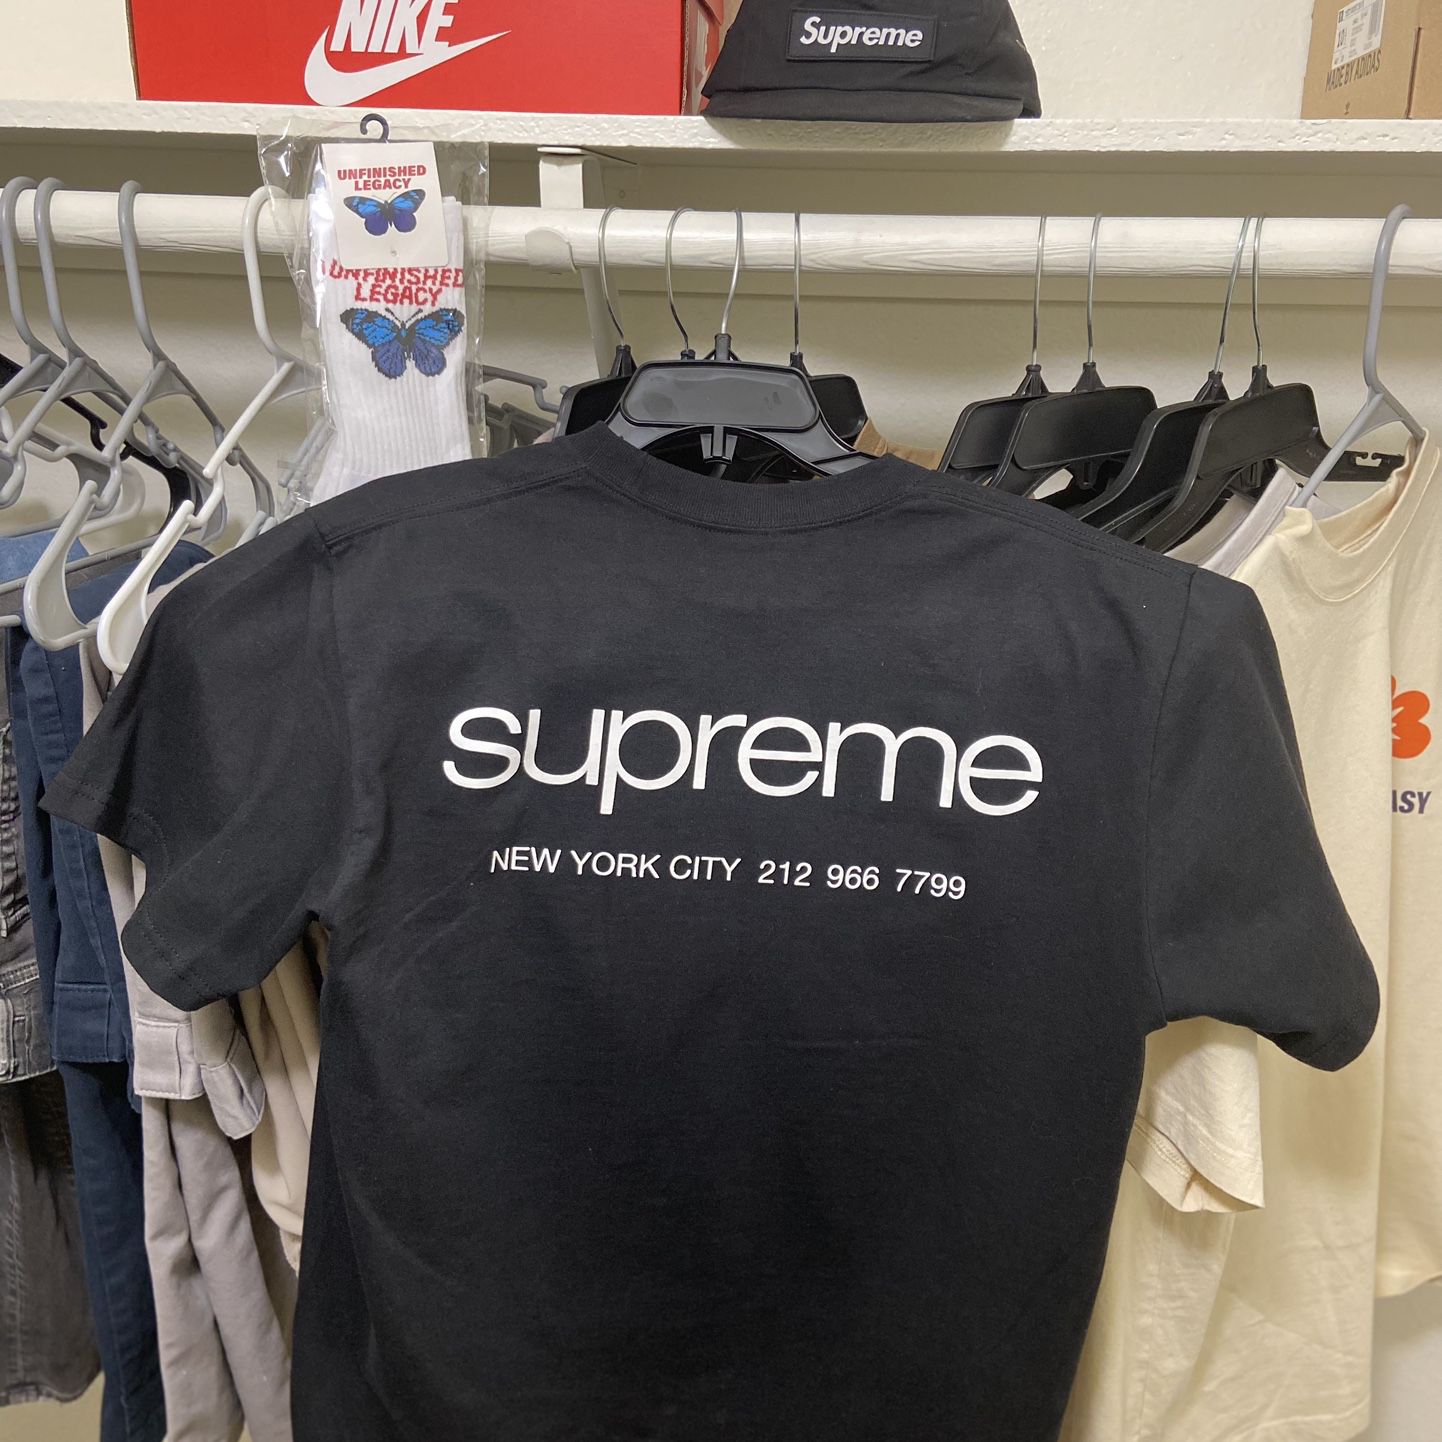 Supreme T Shirt Medium, Supreme Cap, Unfinished Legacy Socks